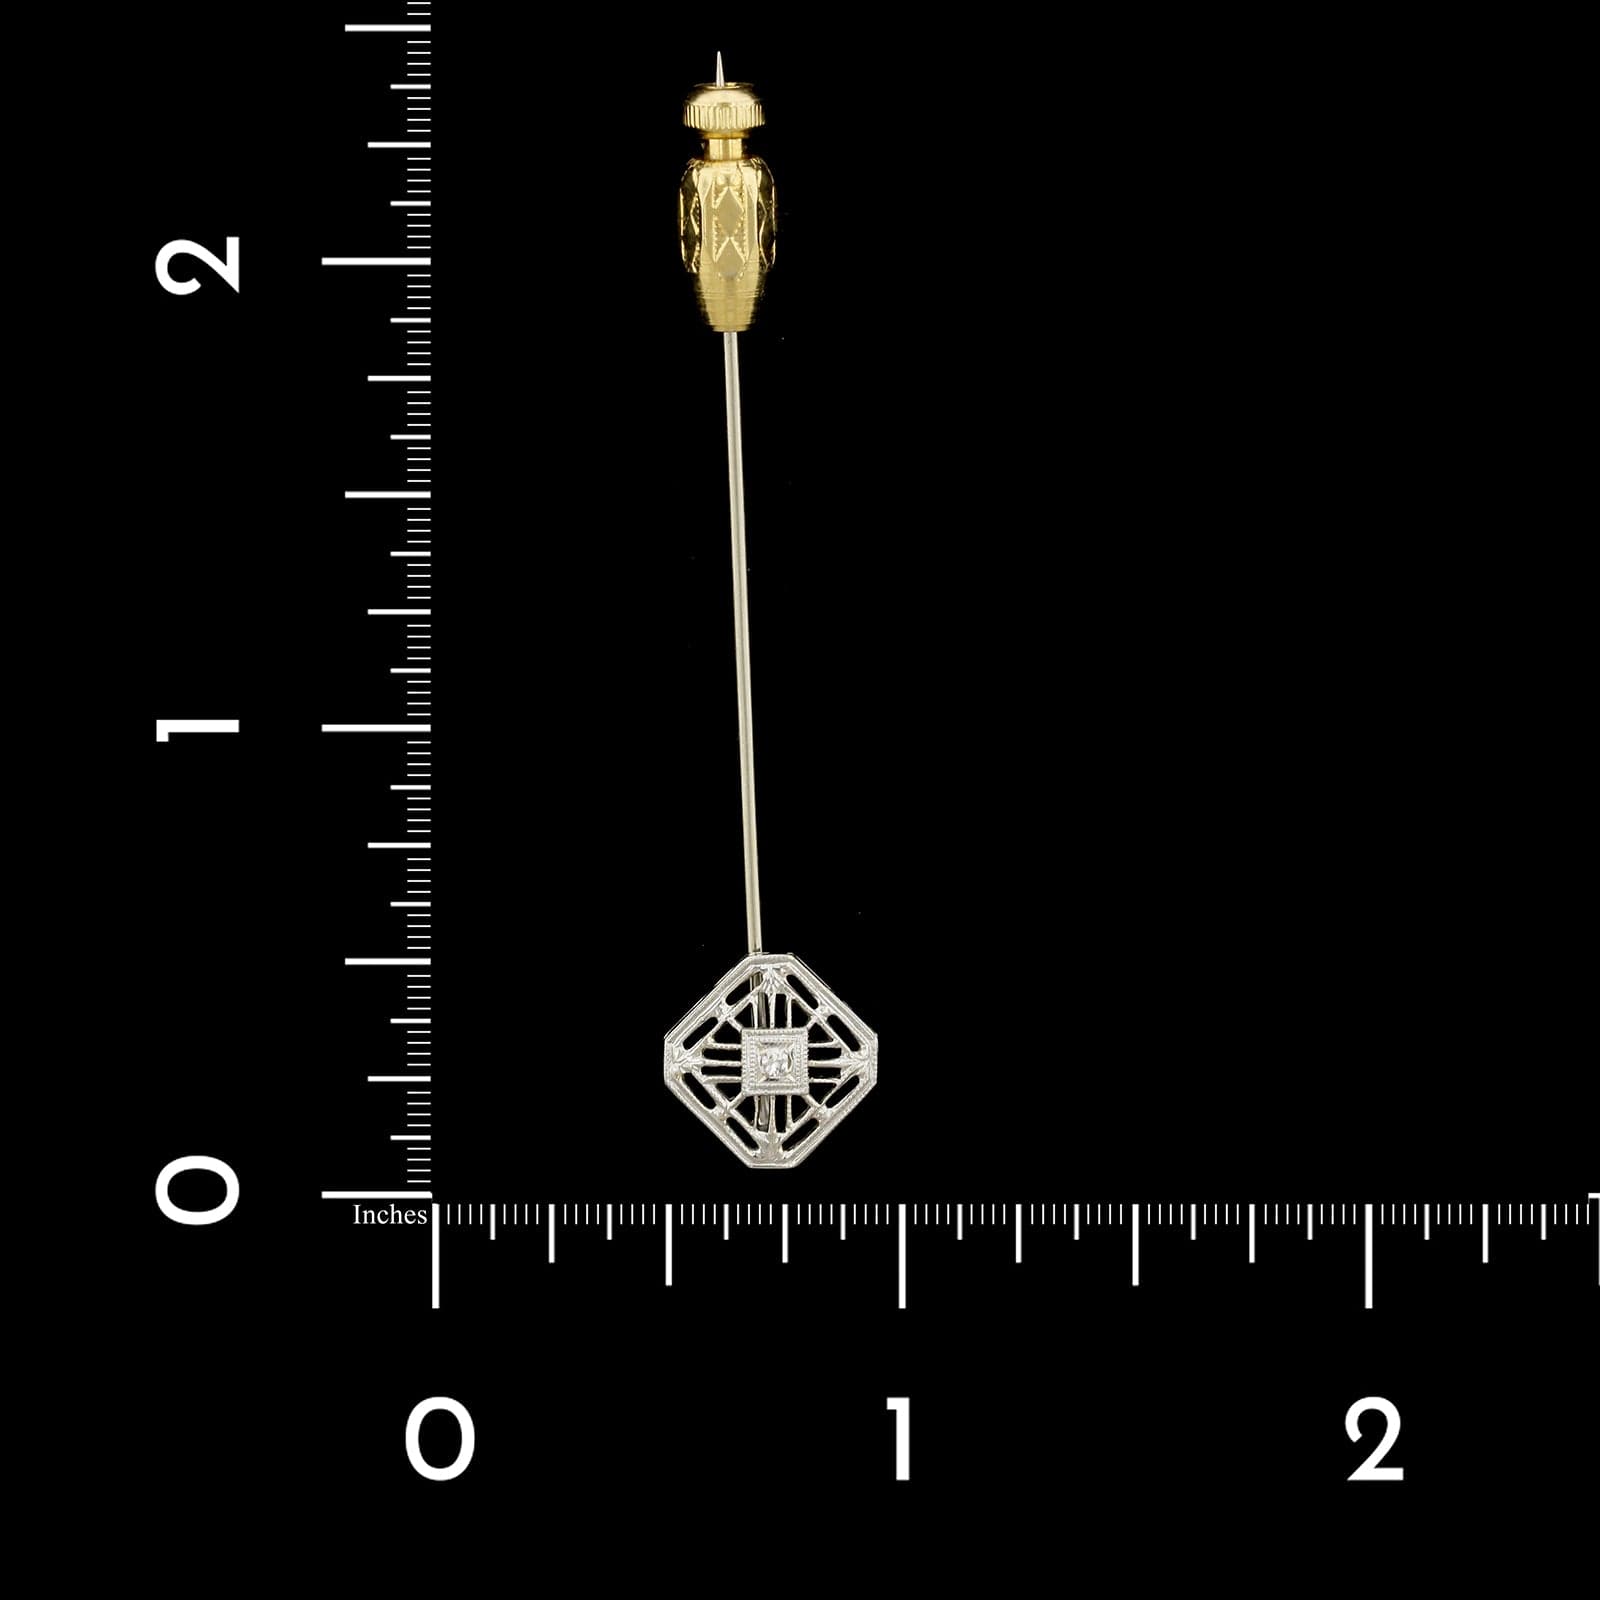 Vintage 14K Two-tone Gold Diamond Stick Pin